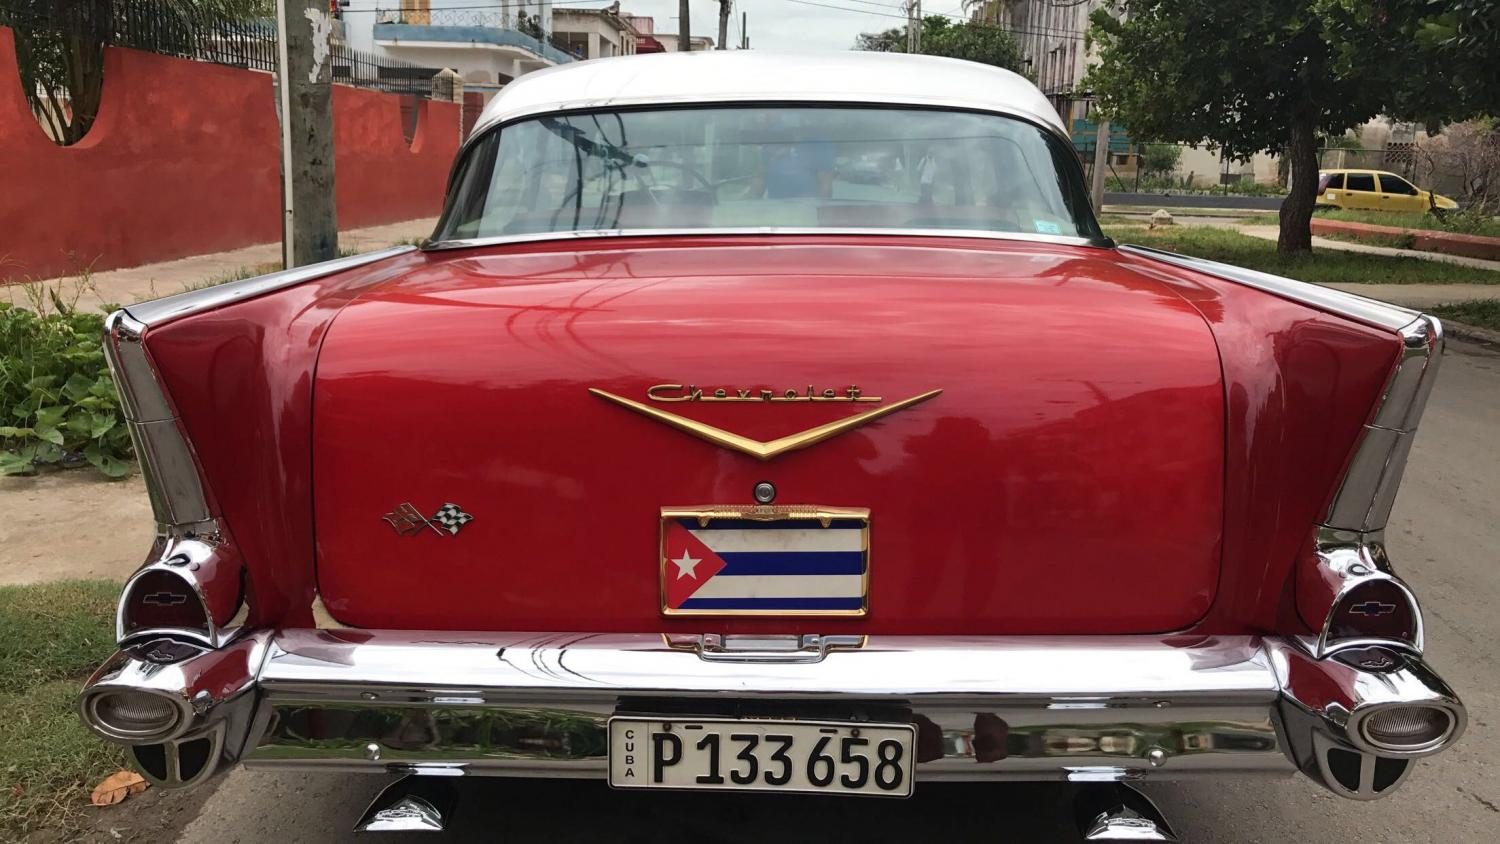 Cuban lifestyle makes big impact